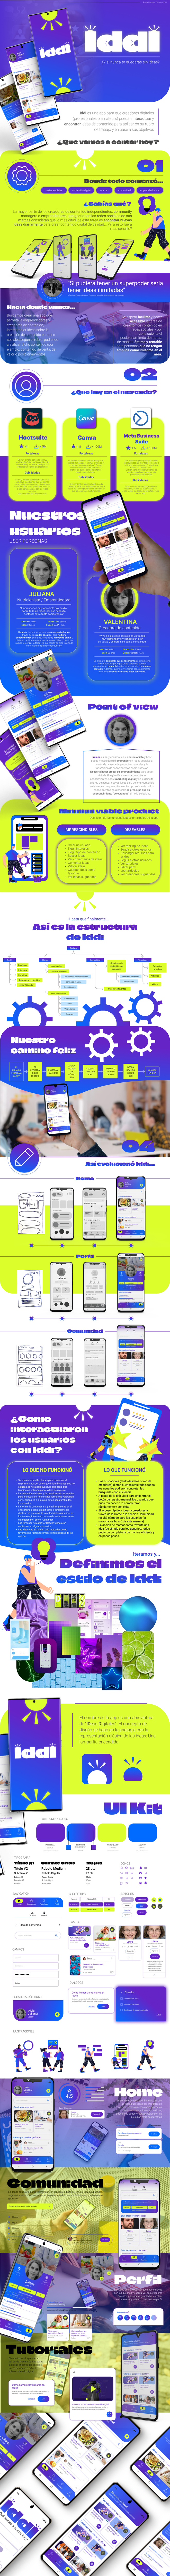 aplication diseño ux Figma mobile Mobile app user experience user interface ux UX design UX UI DESign